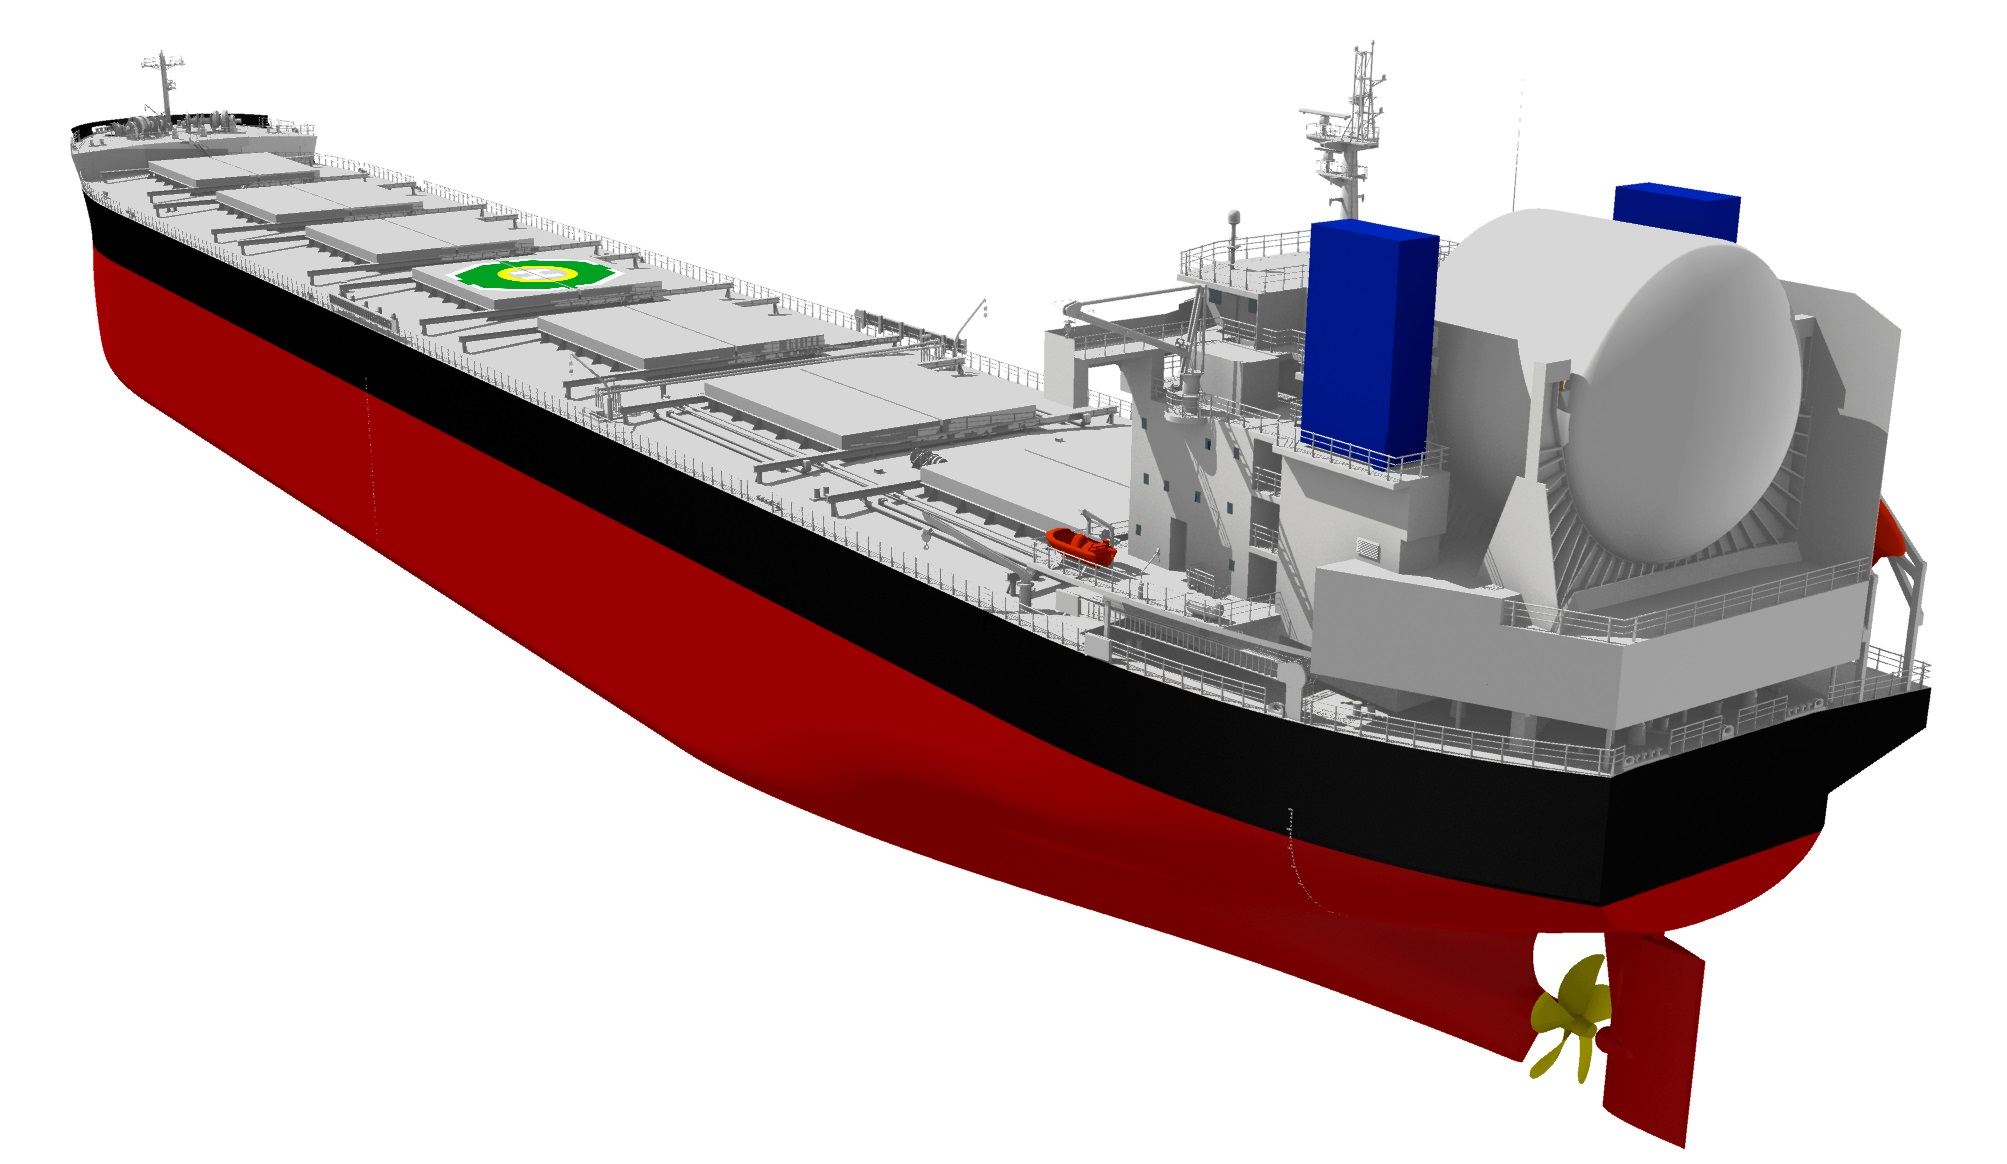 Tsuneishi unveils new LNG-fueled Kamsarmax design